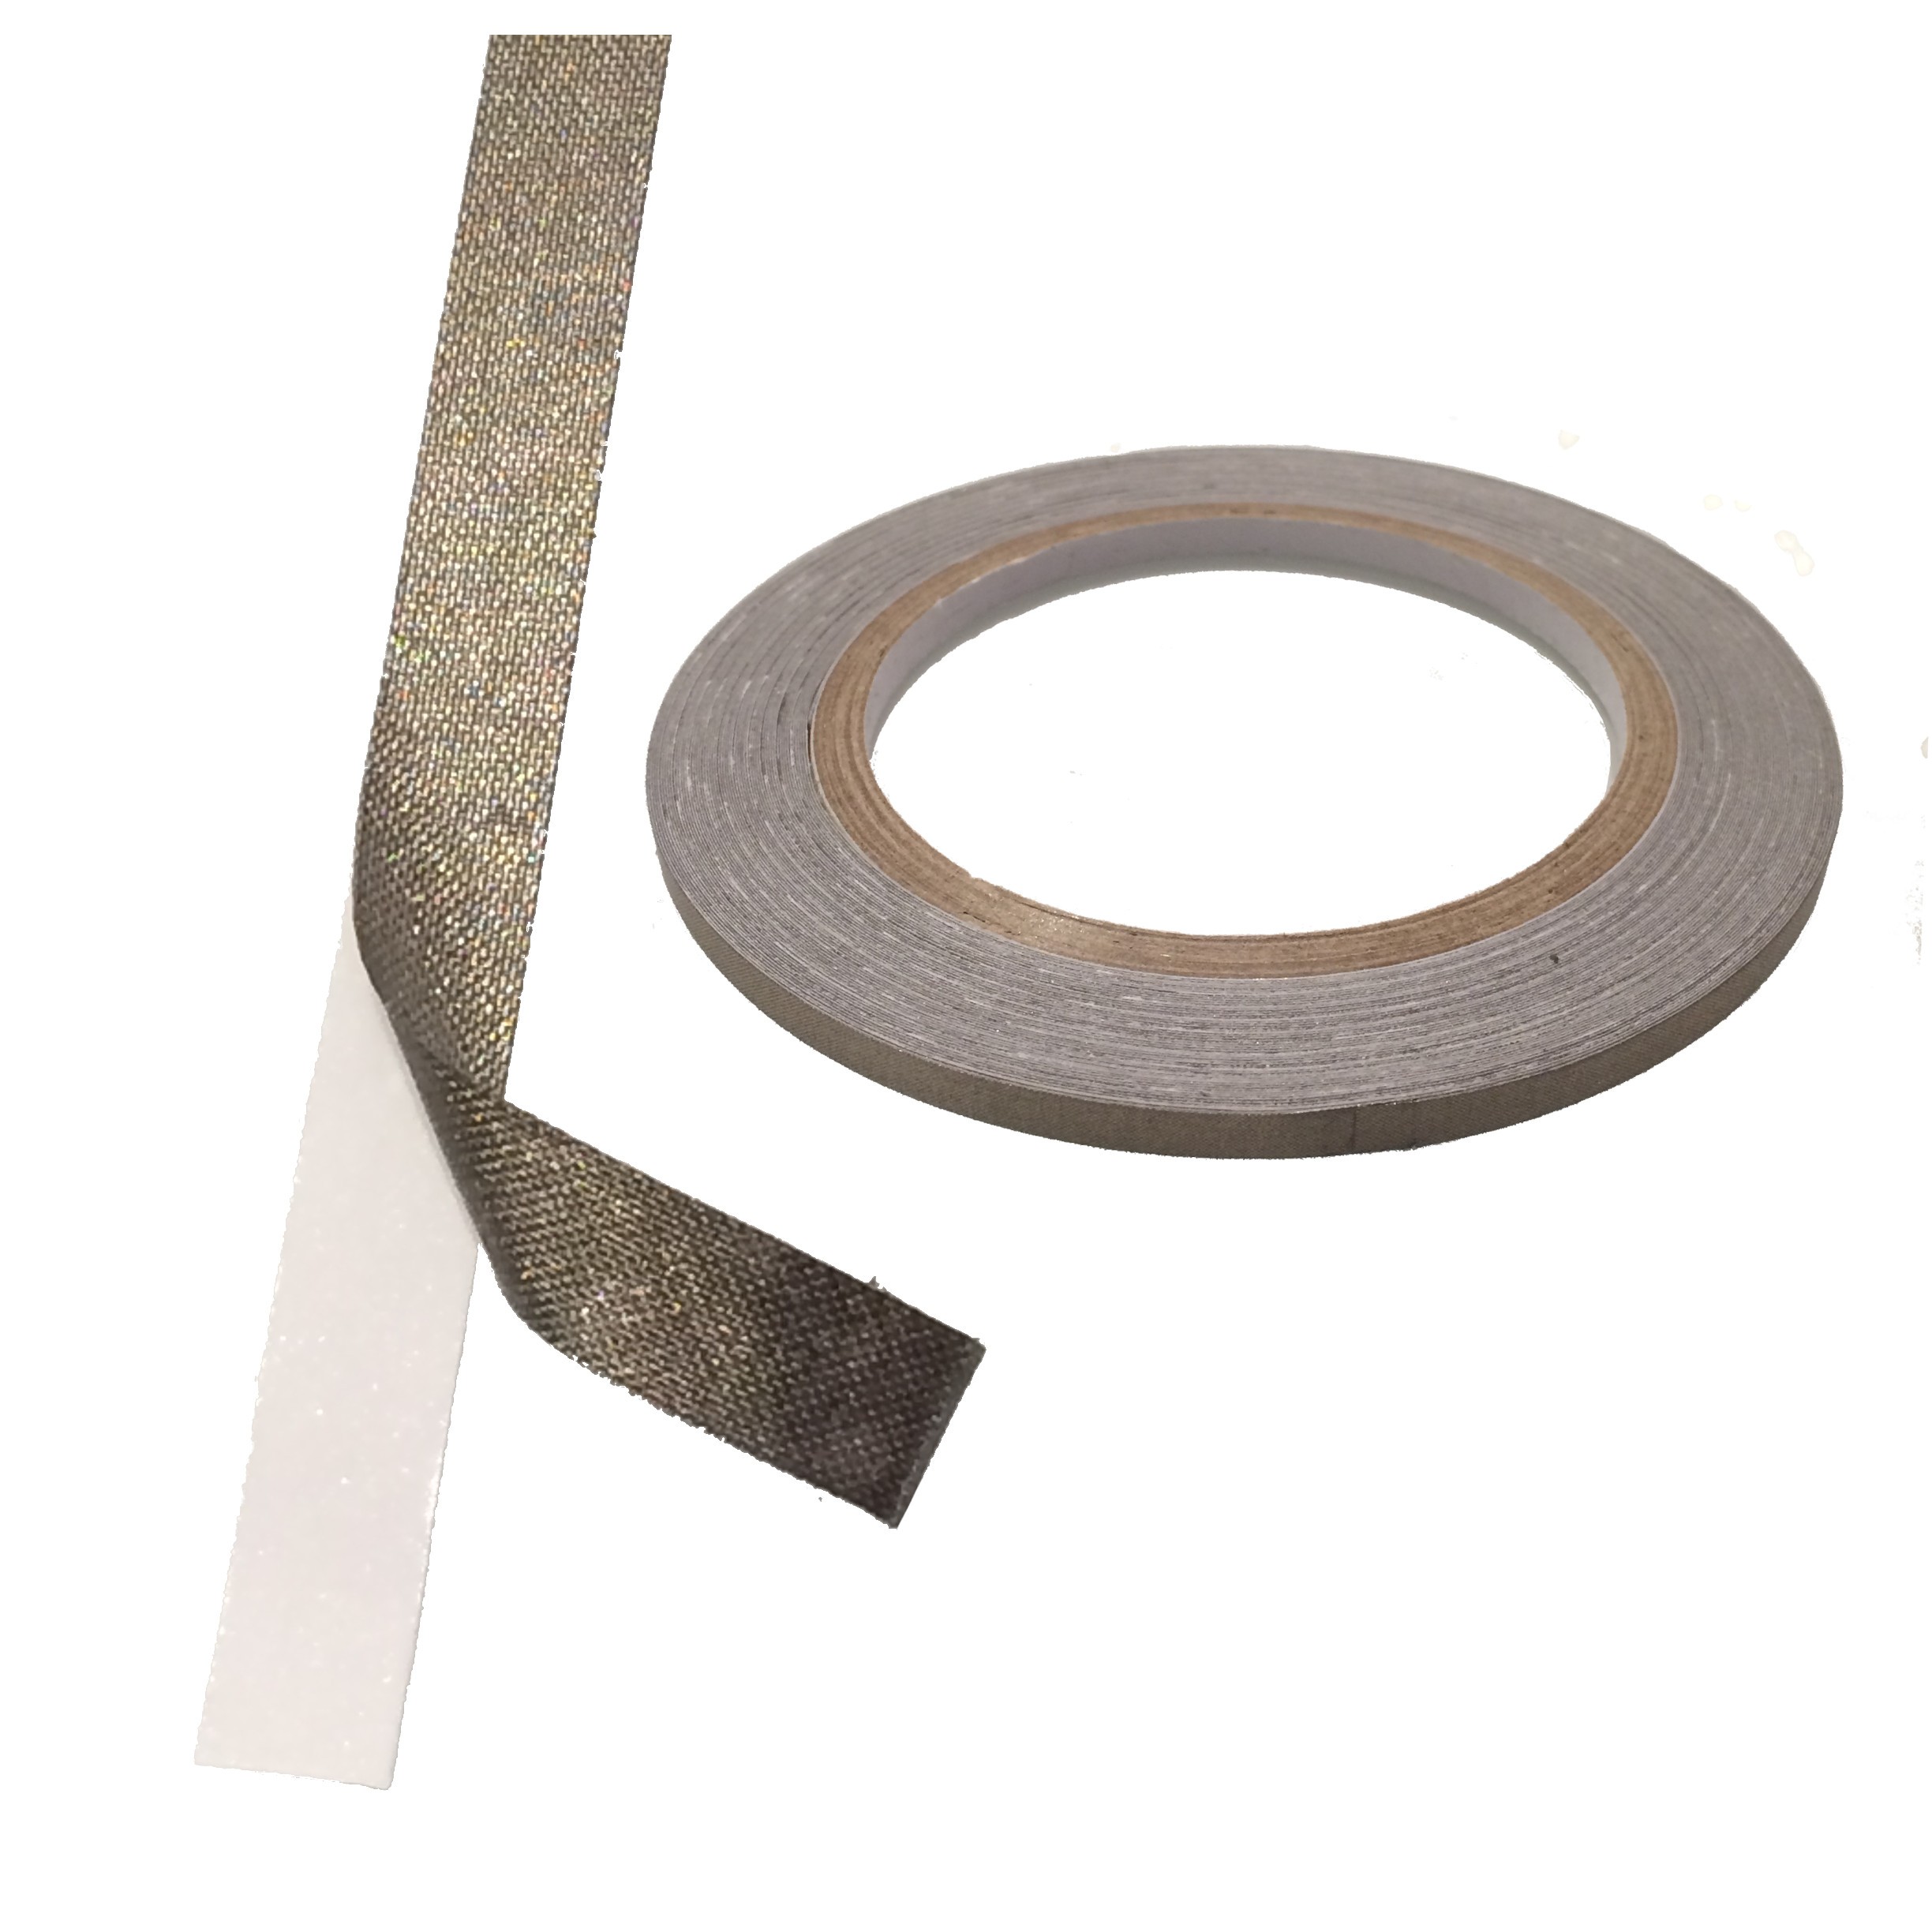 6mm x 20m Single Face Adhesive Electric Conduction Copper Foil Tape fash UQ 